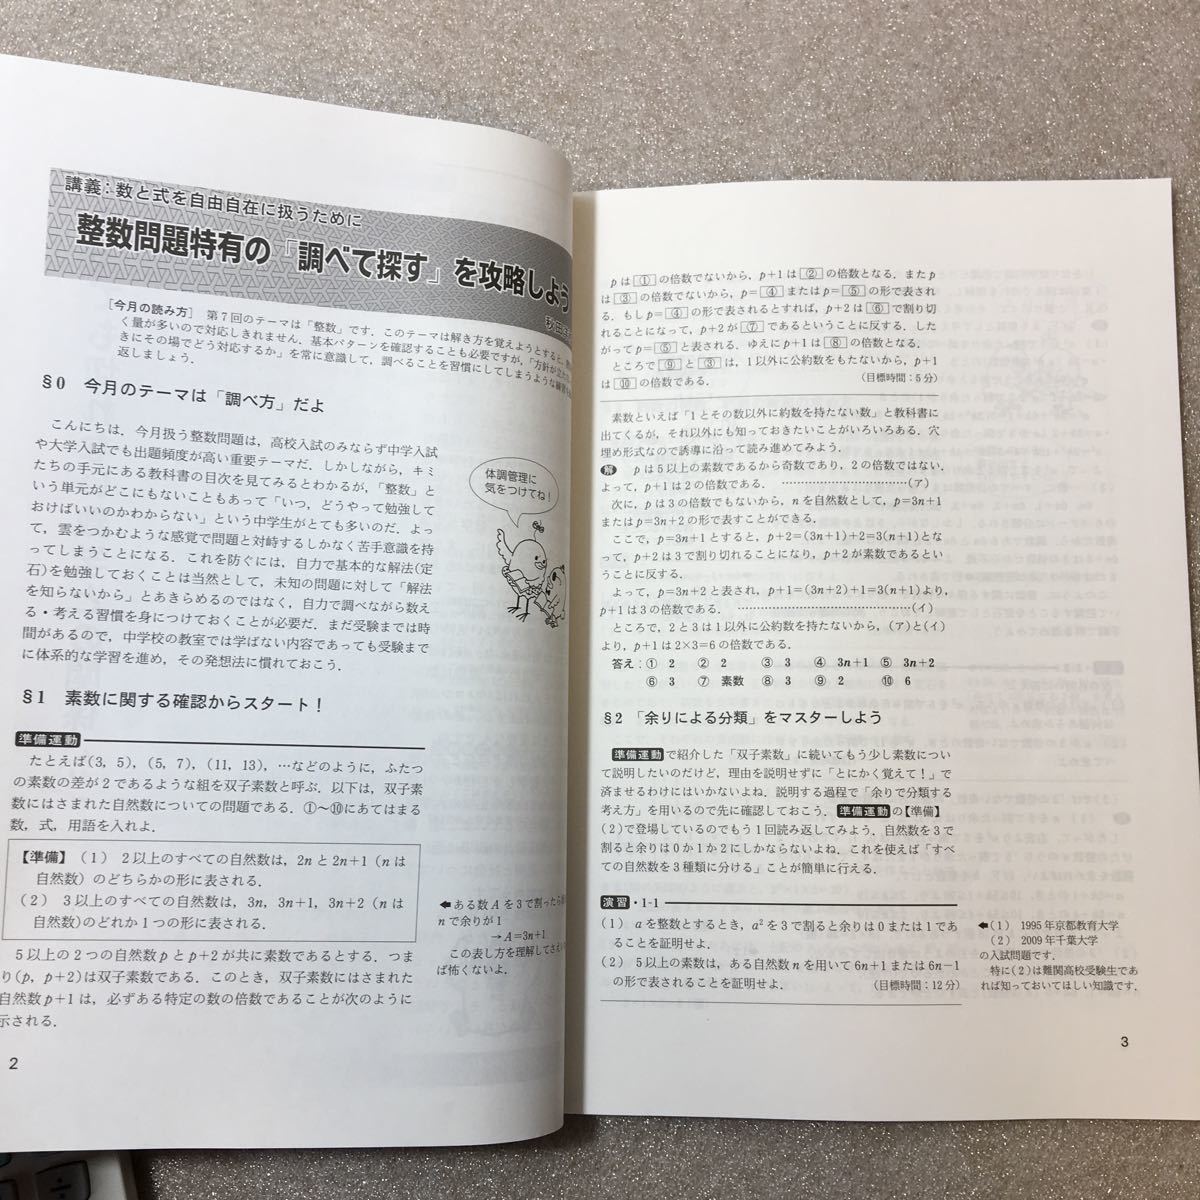 zaa-328♪高校への数学 2019年 10 月号 東京出版　[雑誌]　特集: 数と式-整数 /図形-円(2) 2019/9/4